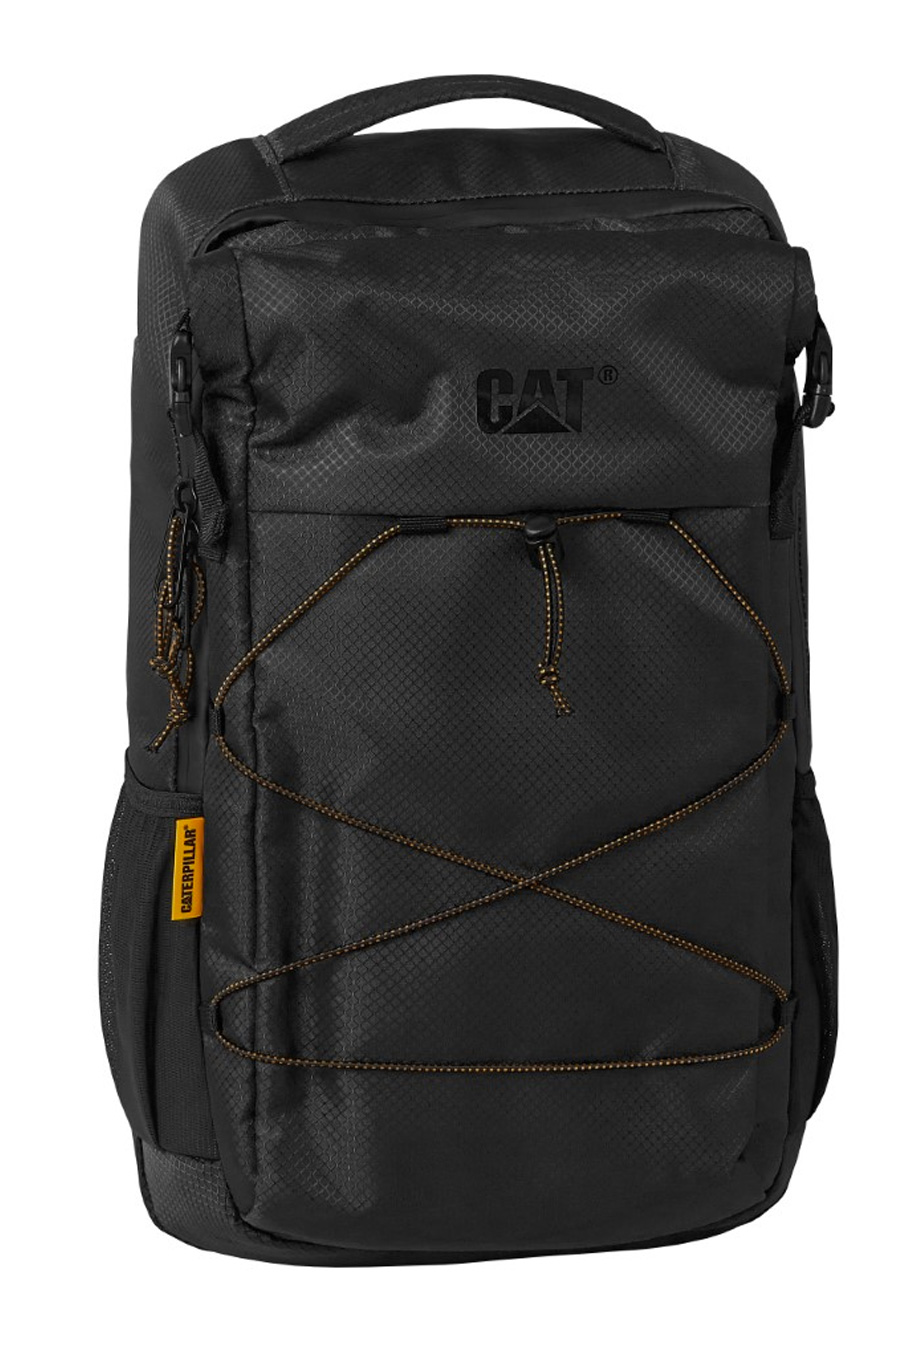 Backpack CAT 84438-01